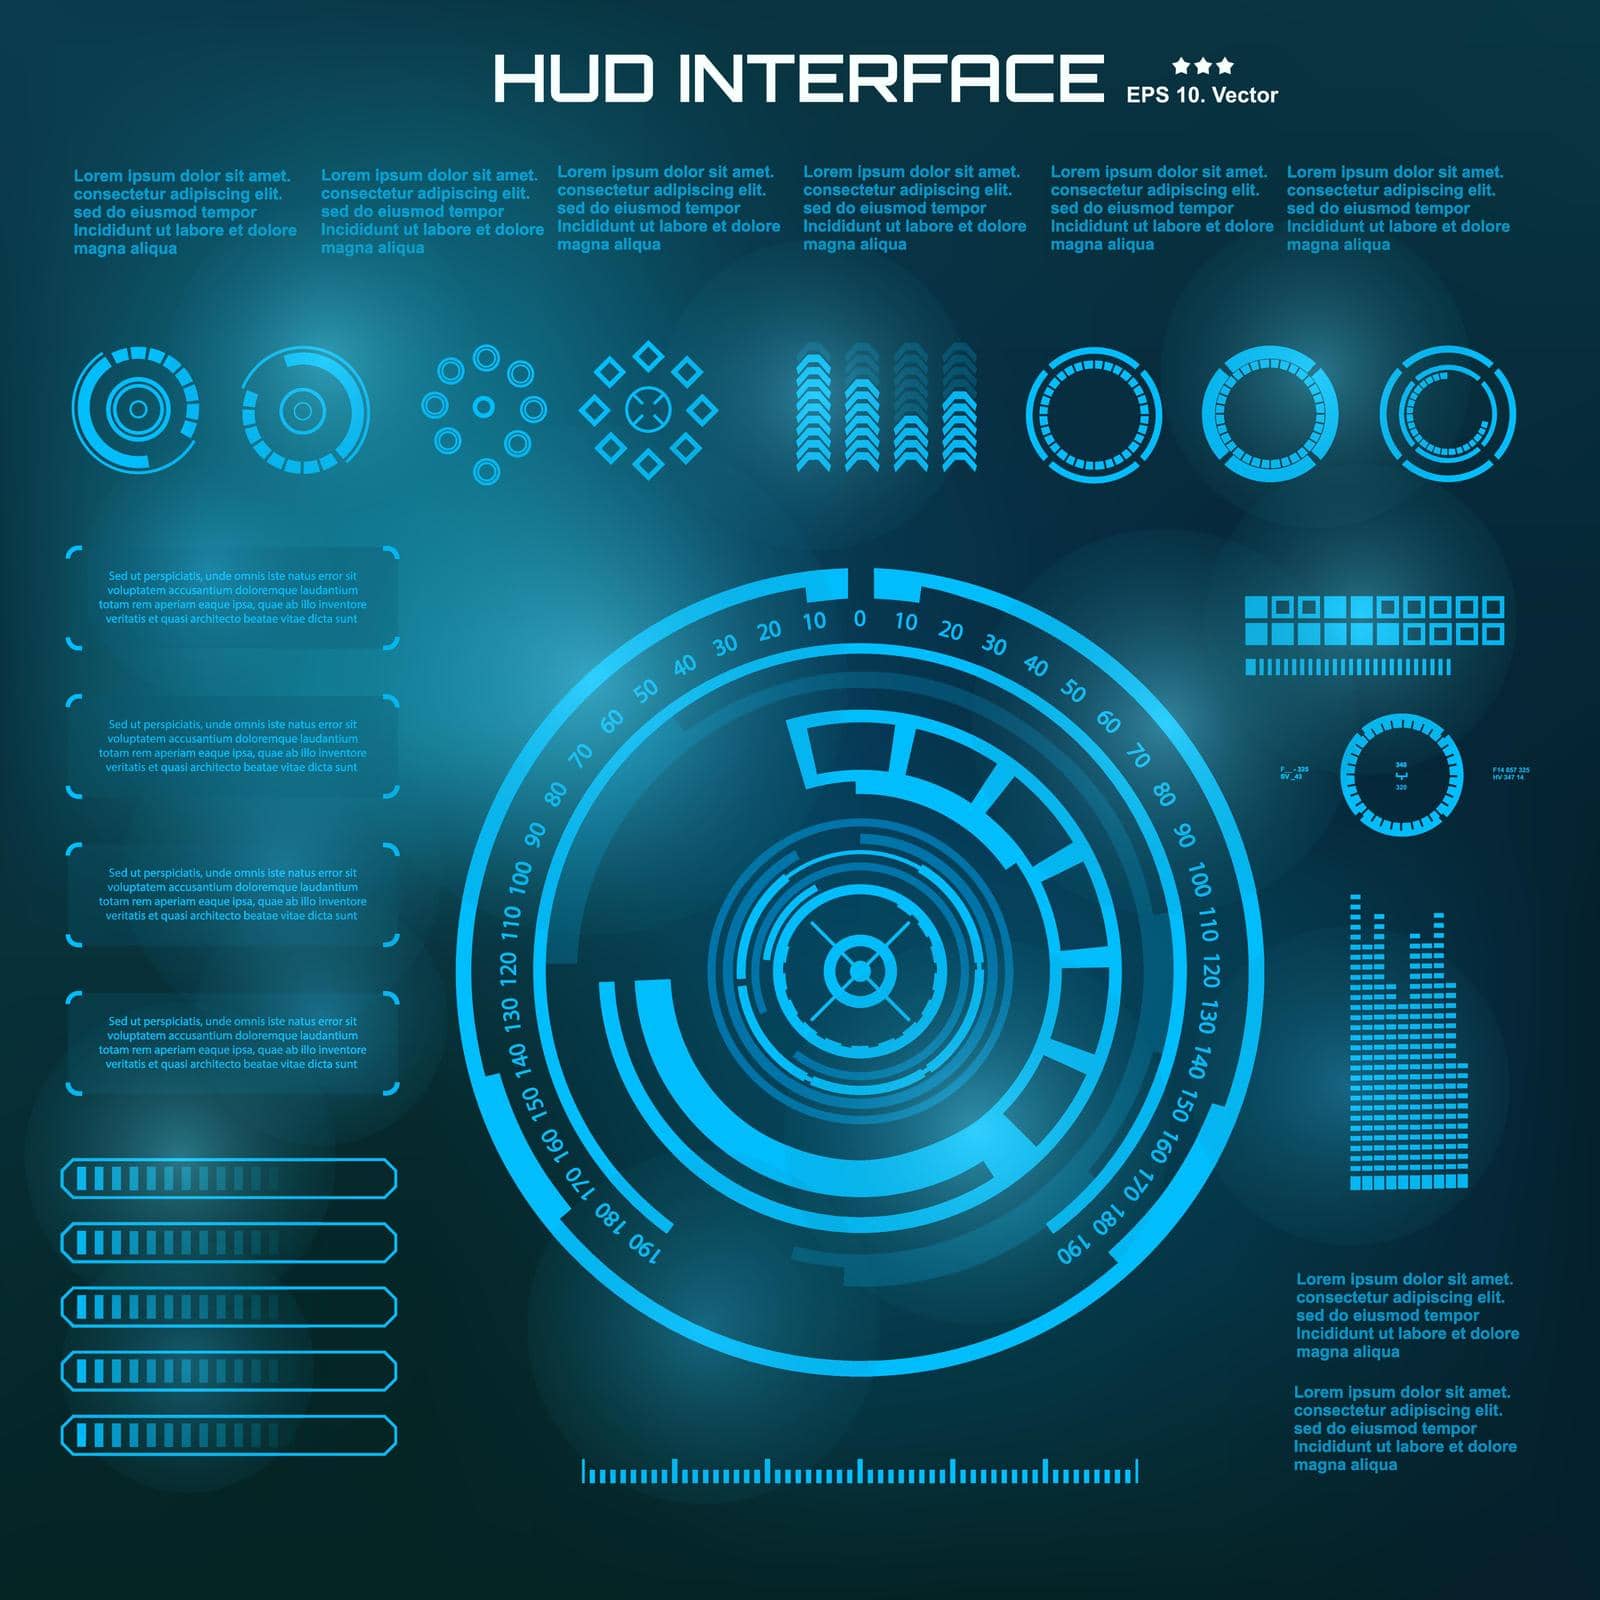 Futuristic blue virtual graphic touch user interface